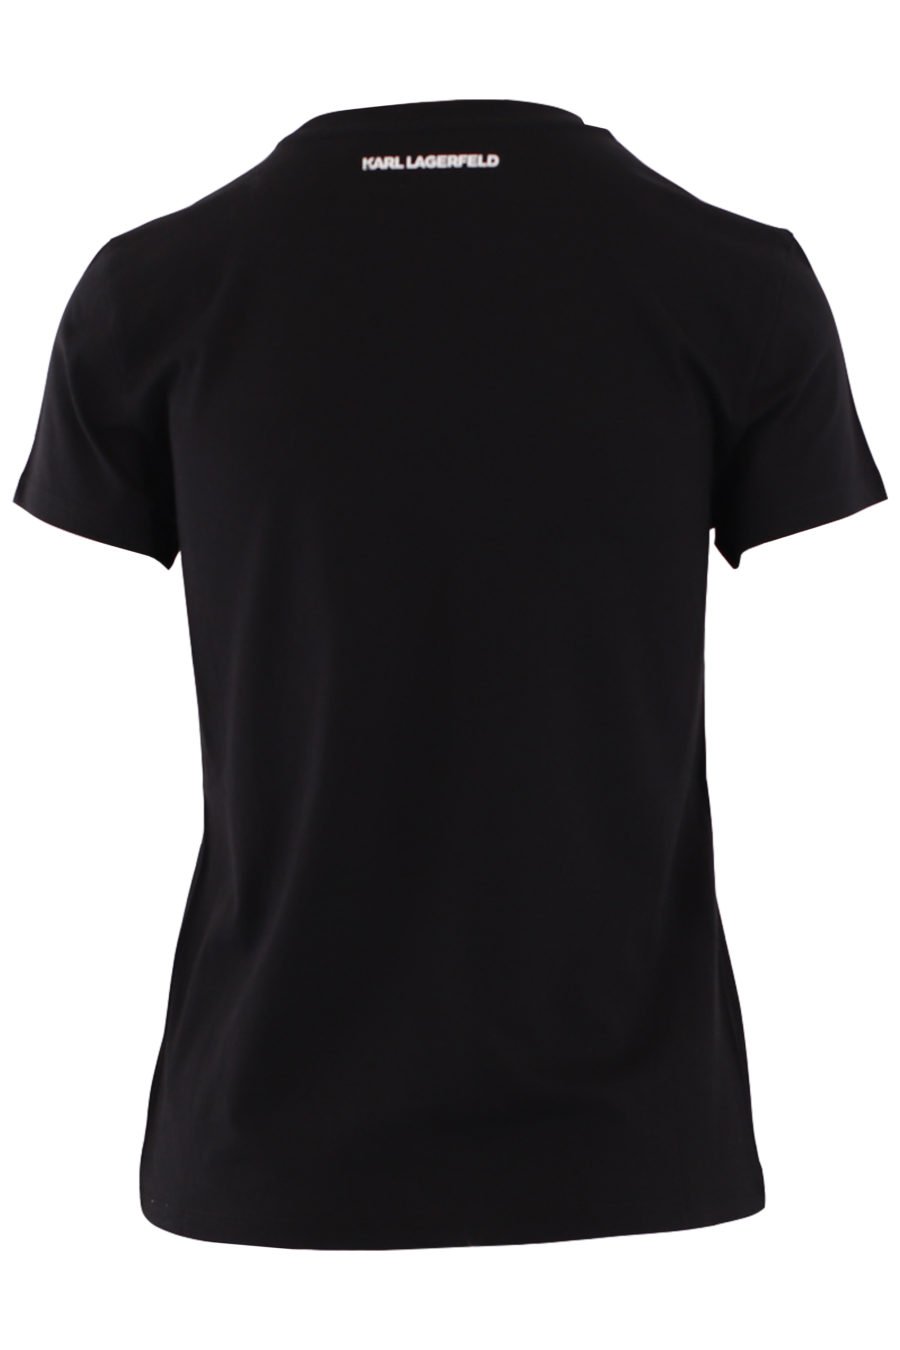 T-shirt noir avec grand logo en strass - IMG 9011